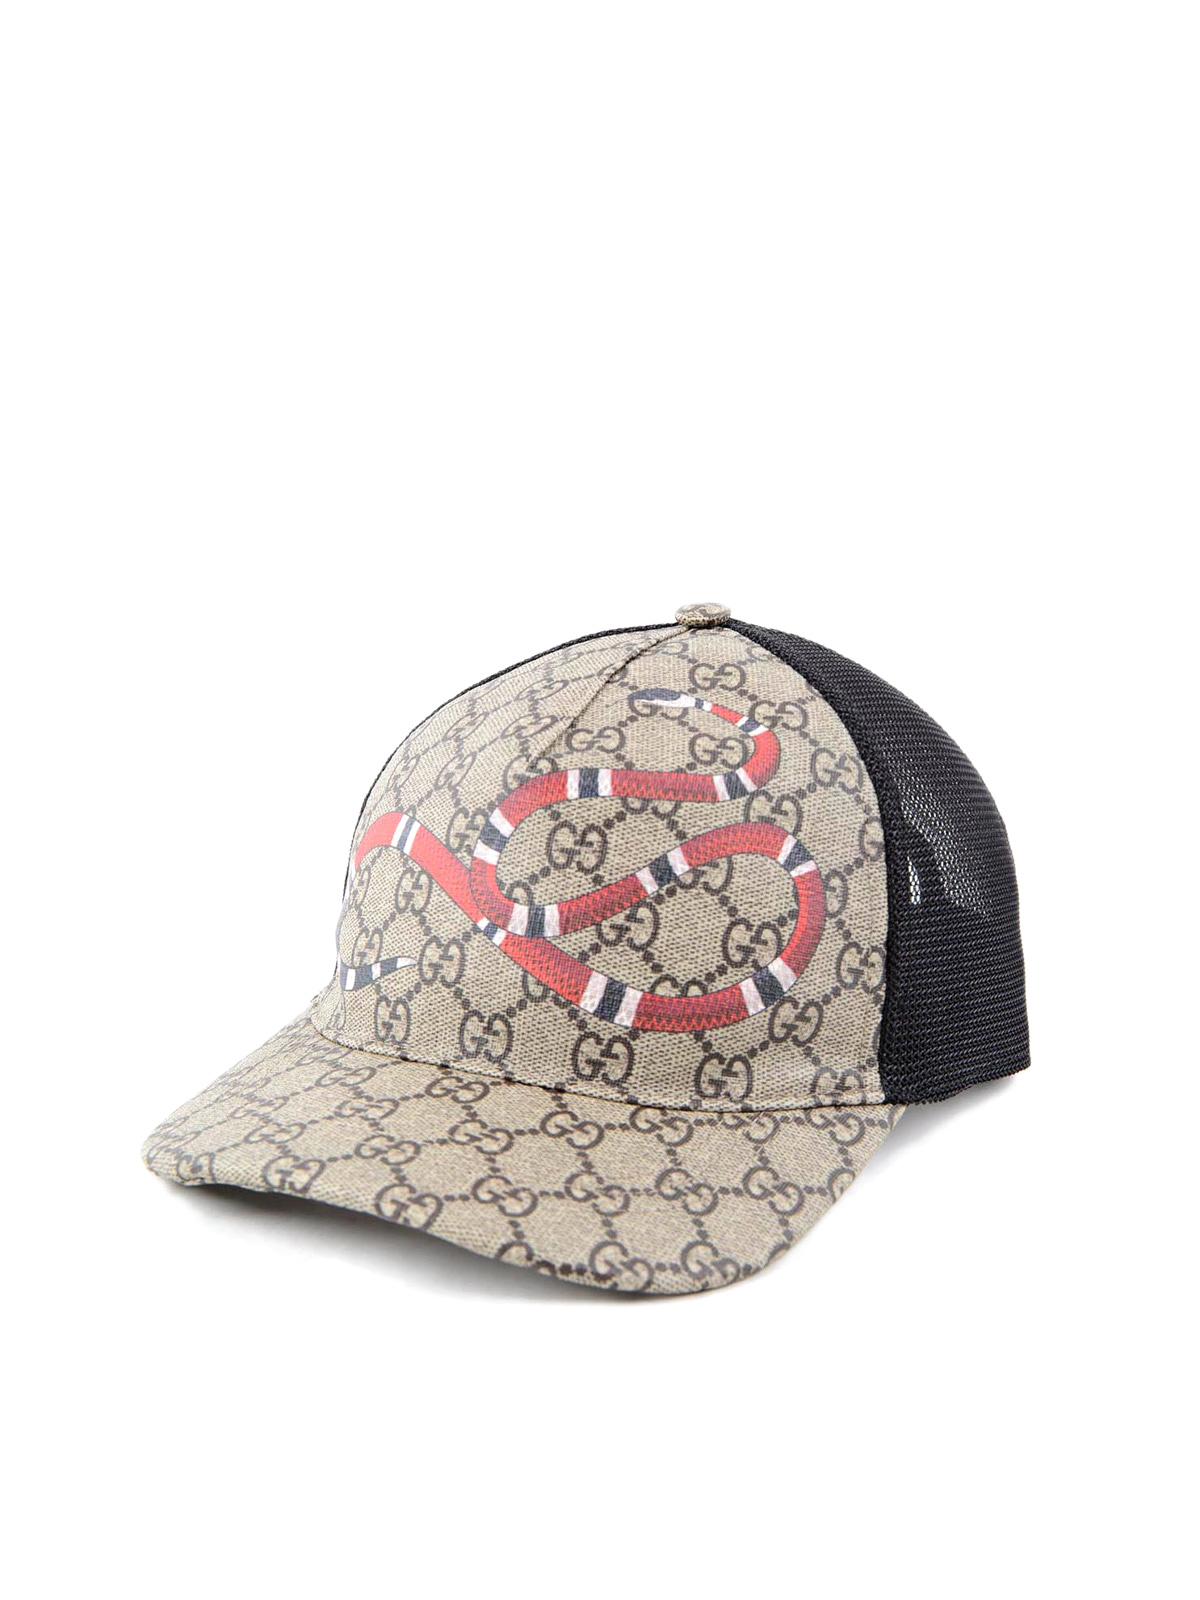 gucci snake baseball cap